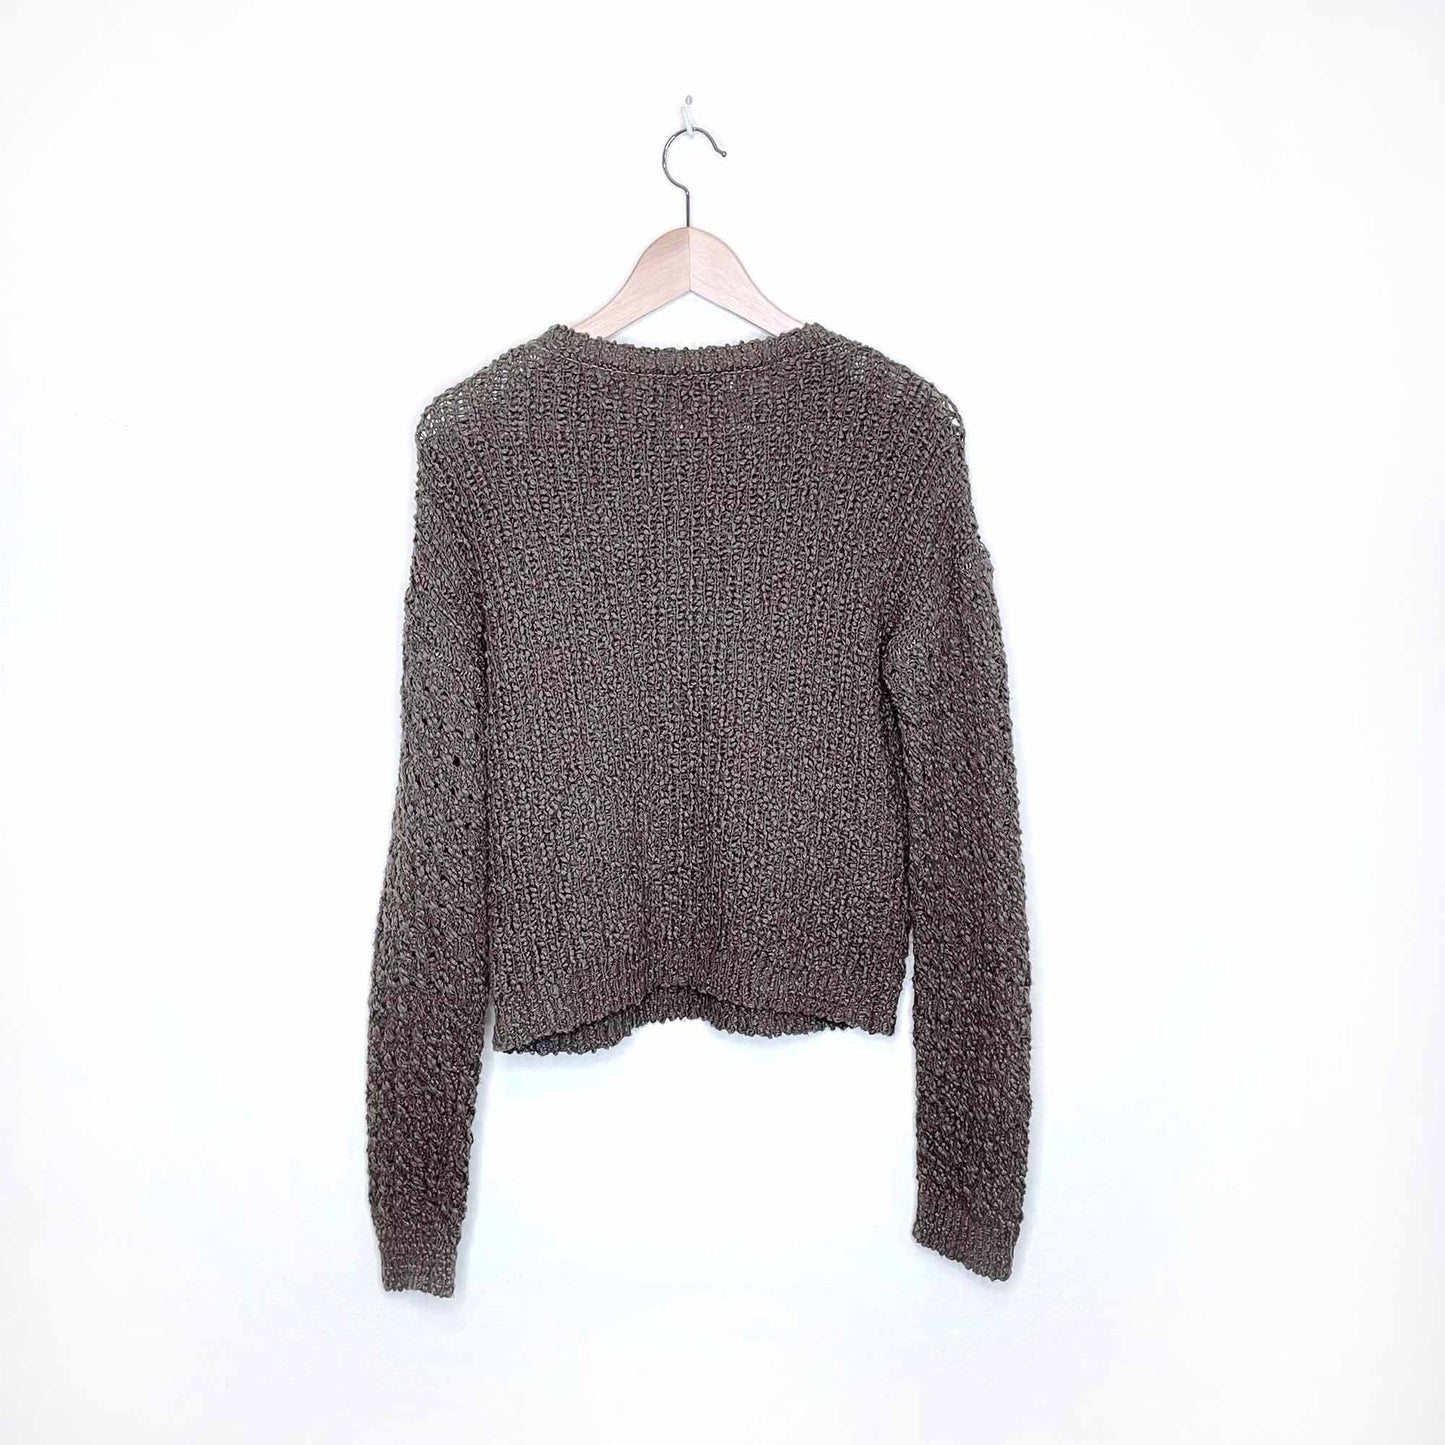 john + jenn loose knit fringe front sweater - size small